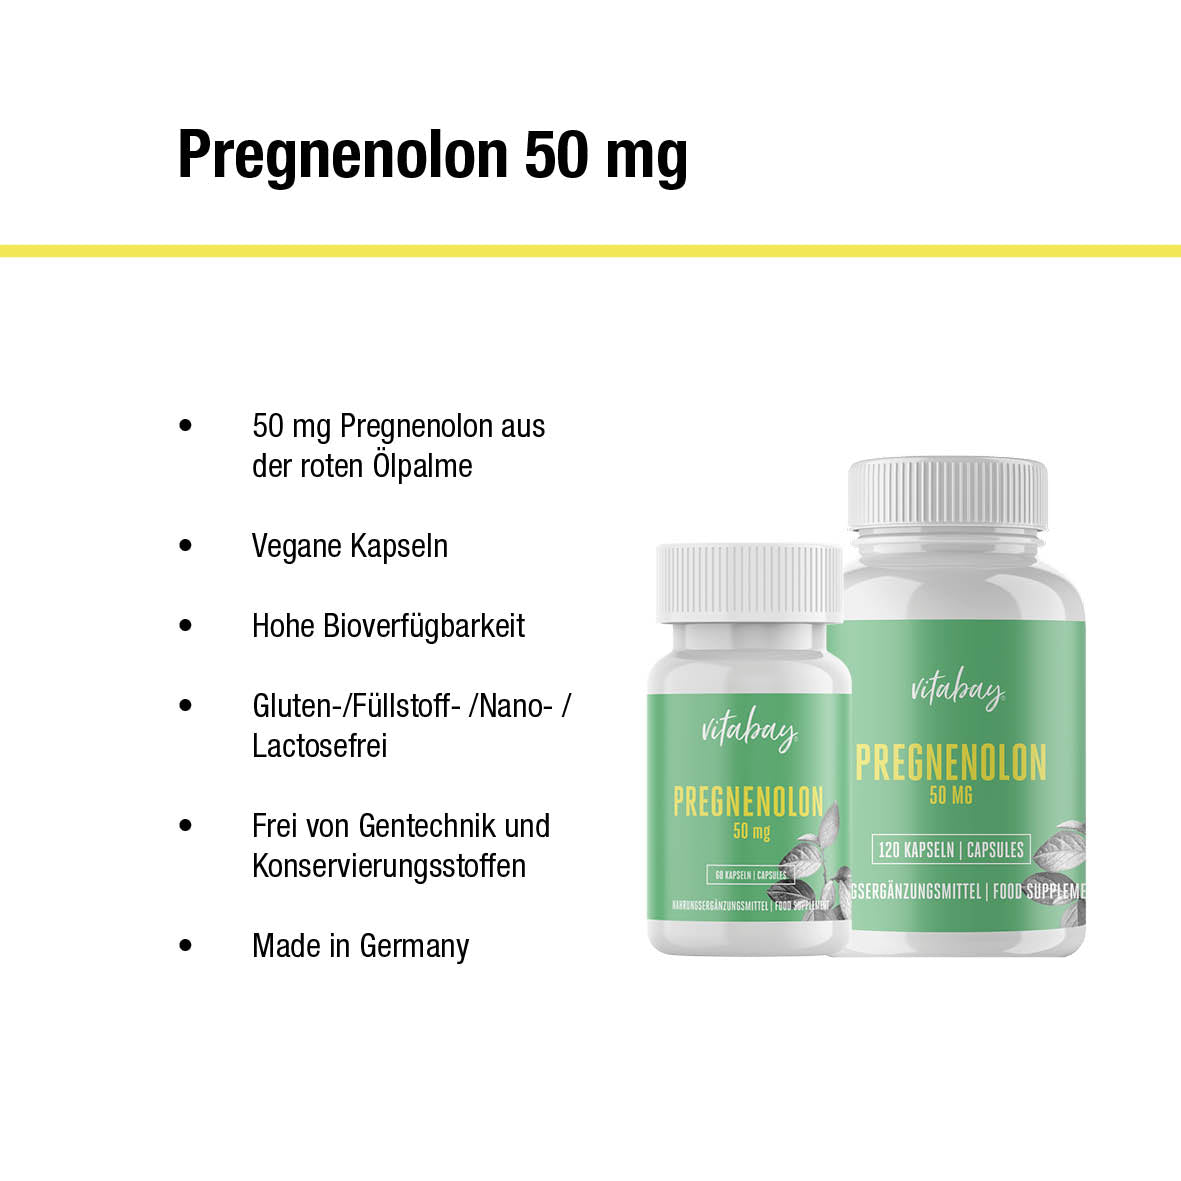 Pregnenolon 50 mg - aus Rotem Palmöl Extrakt - 60 vegane Kapseln